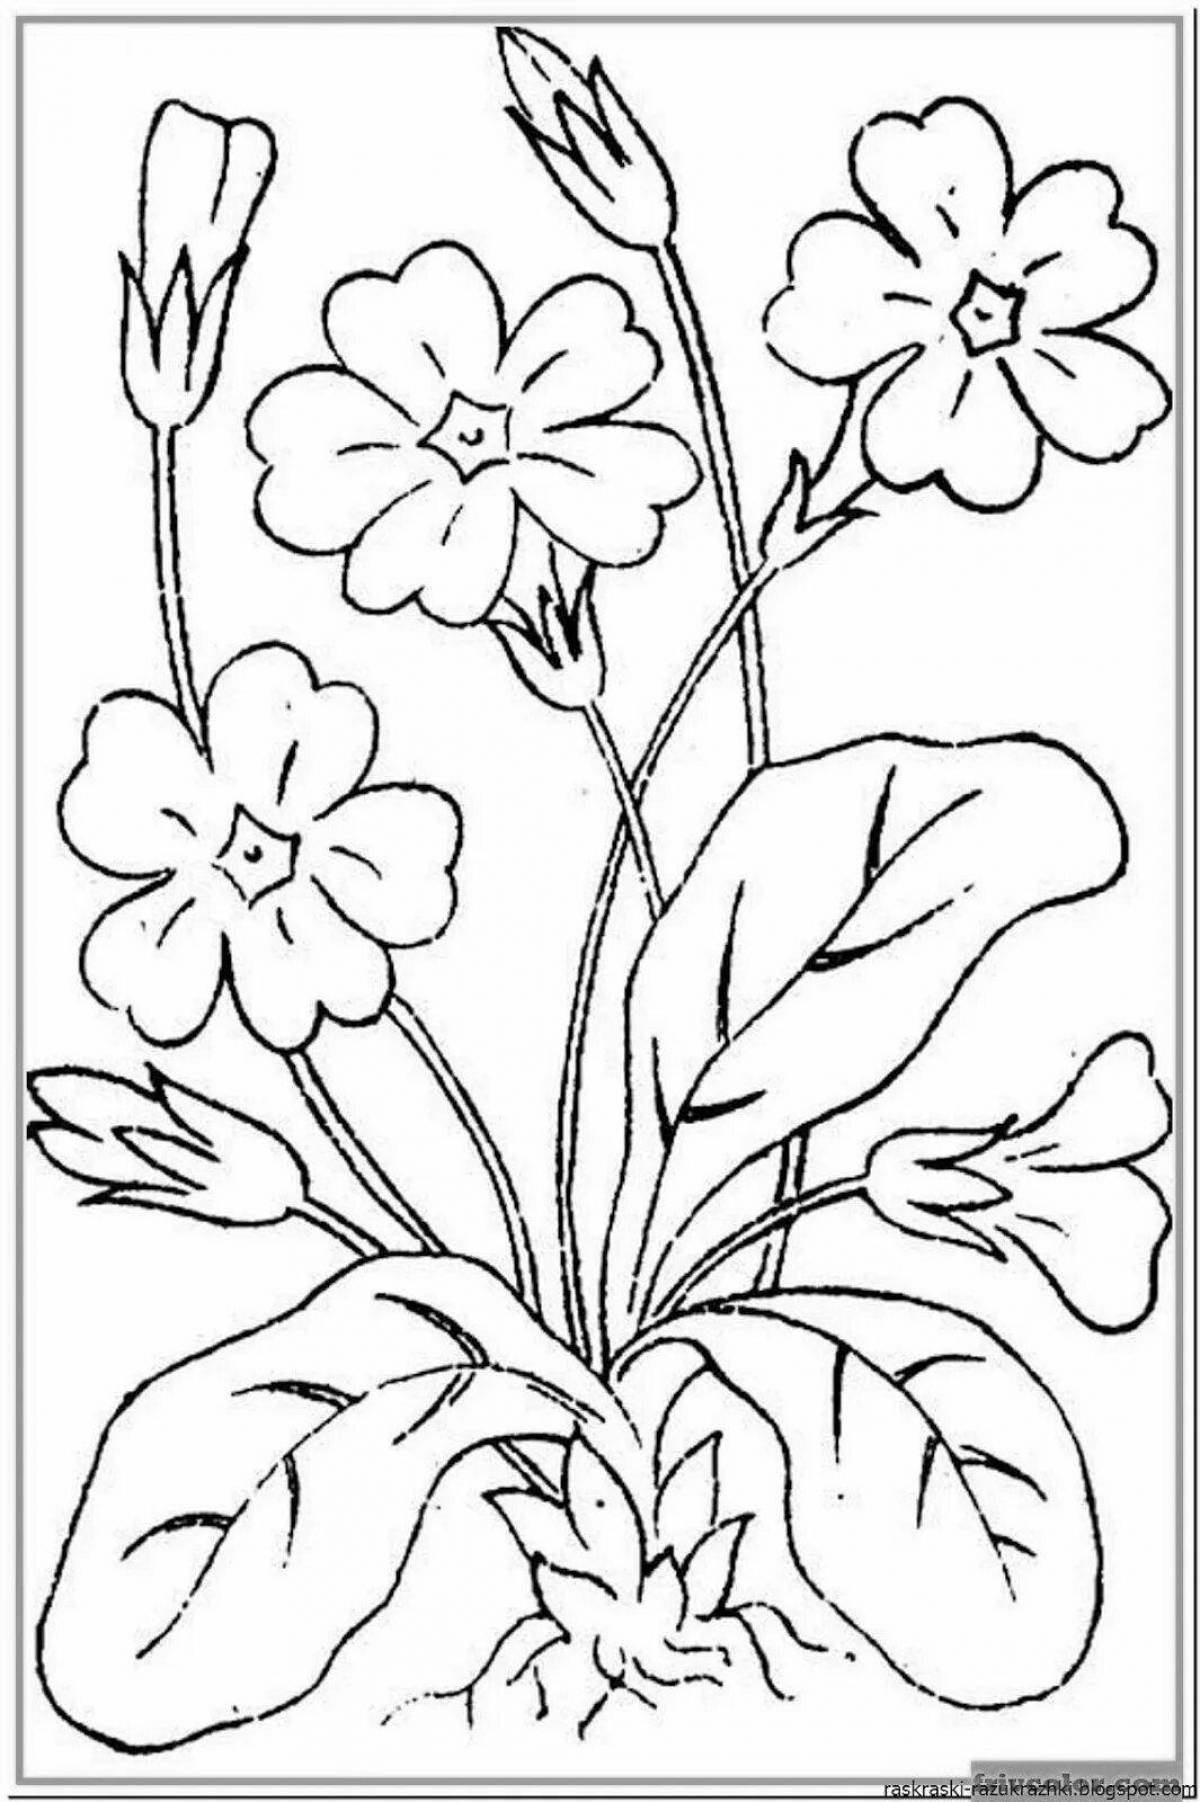 Primrose corydalis coloring page live